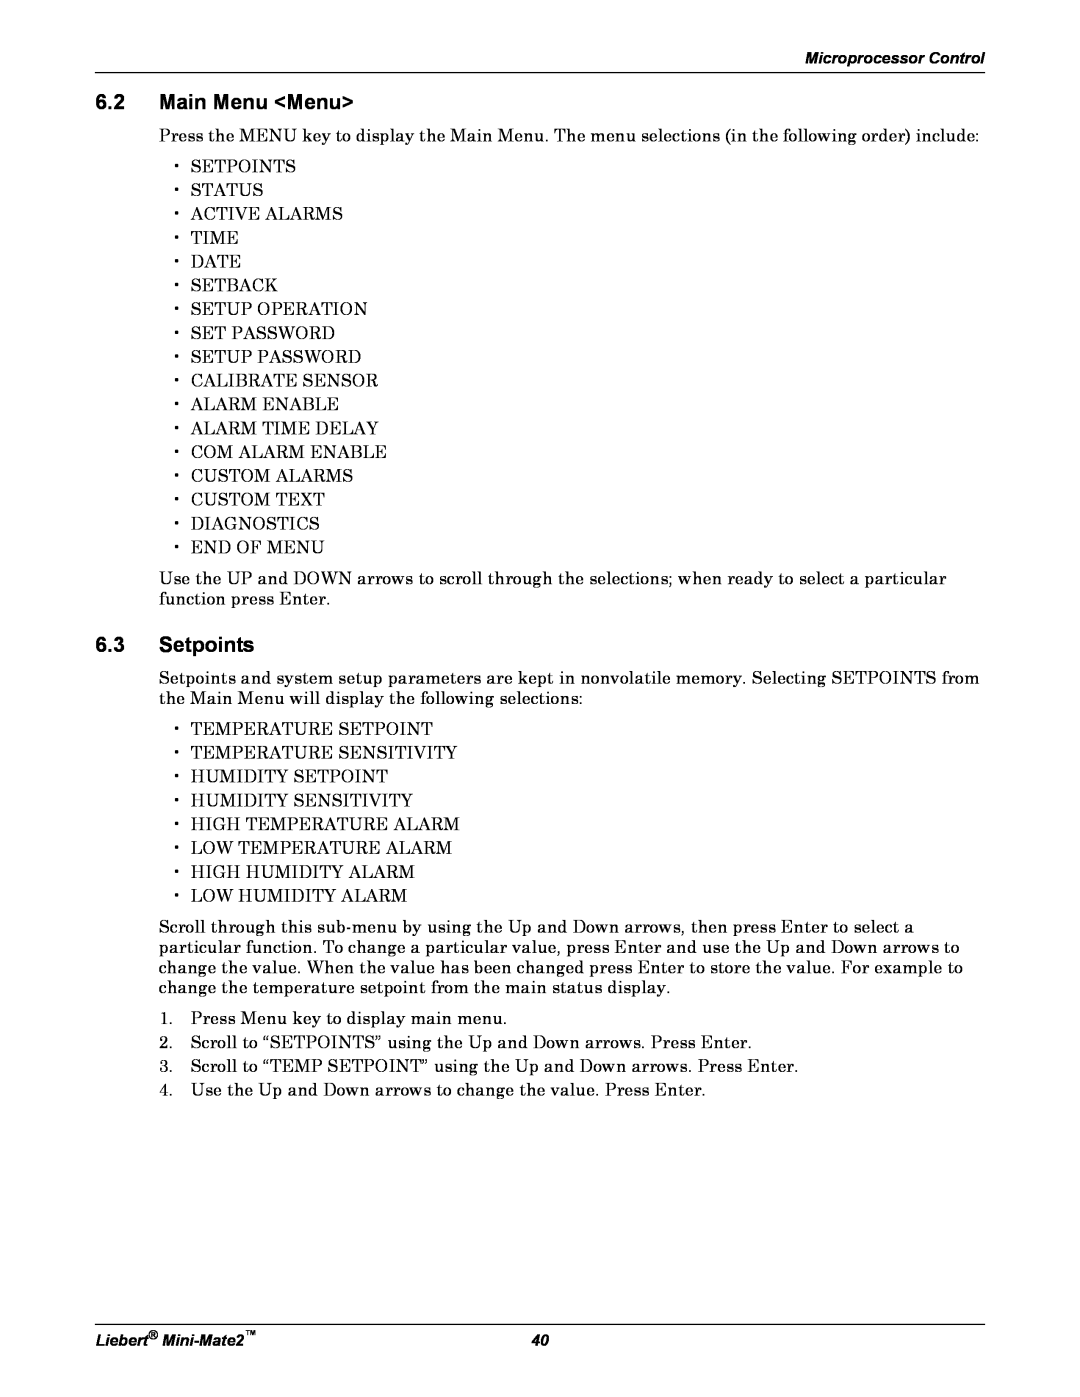 Emerson MINI-MATE2 user manual 6.2Main Menu Menu, 6.3Setpoints 